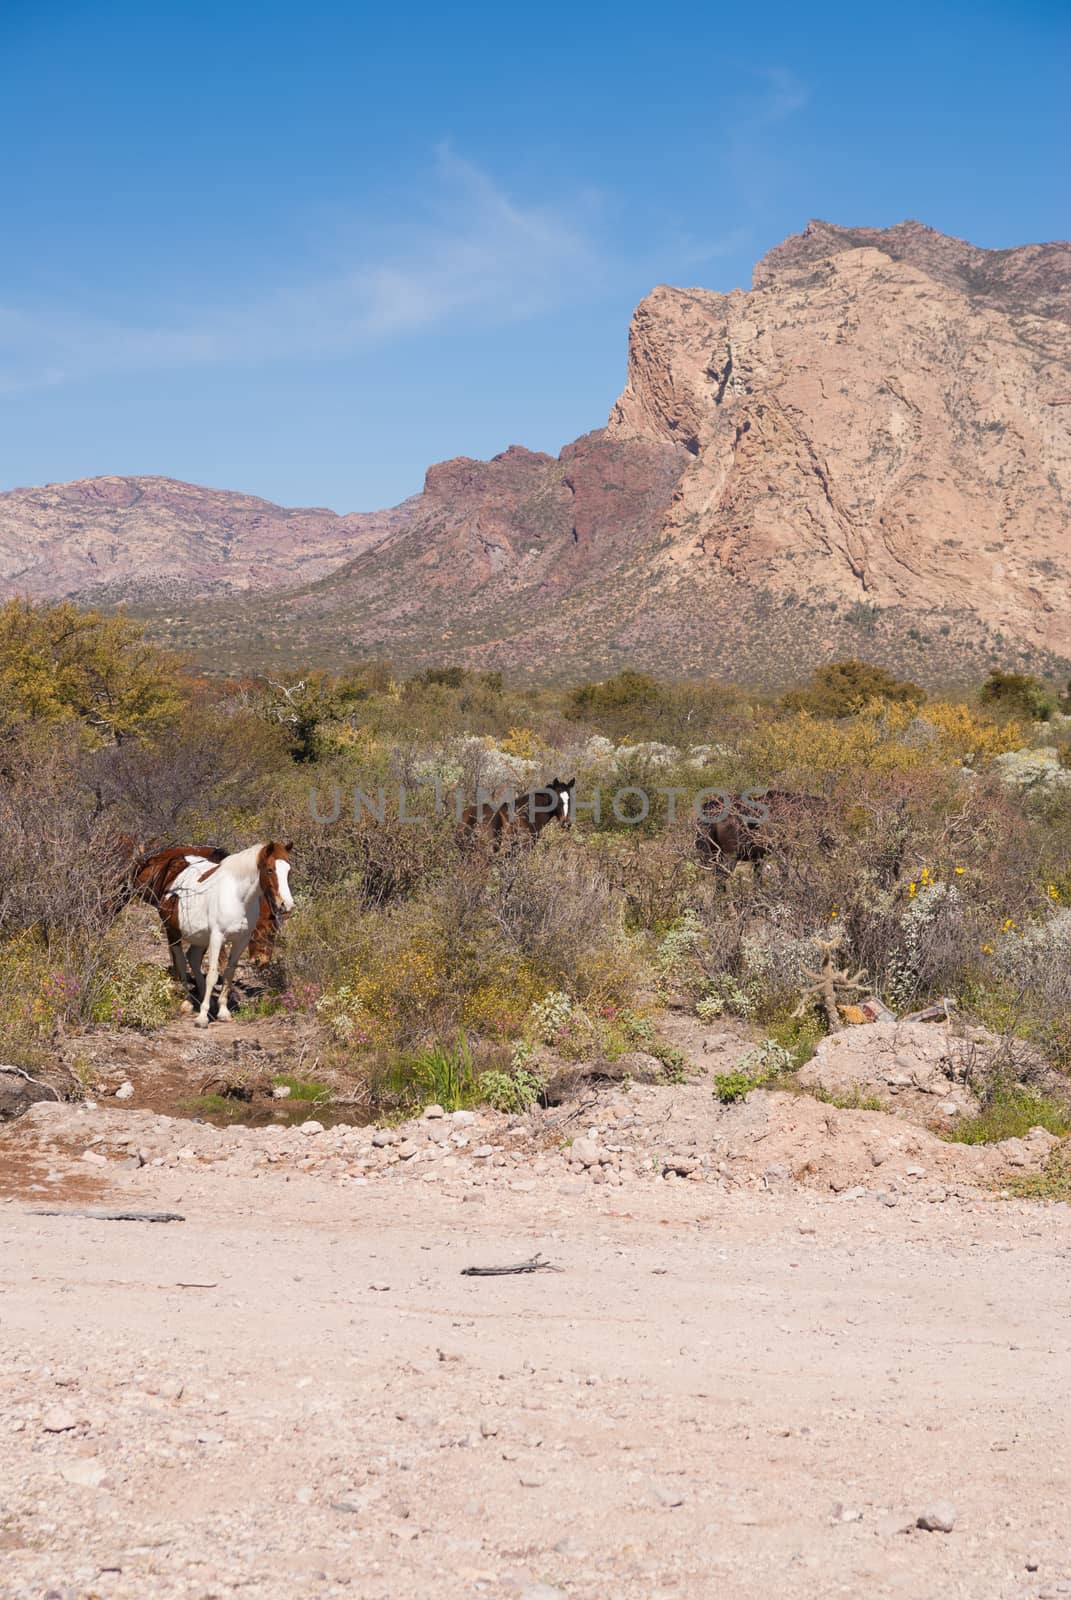 Wild horses in Mountain desert of Sonora Mexico